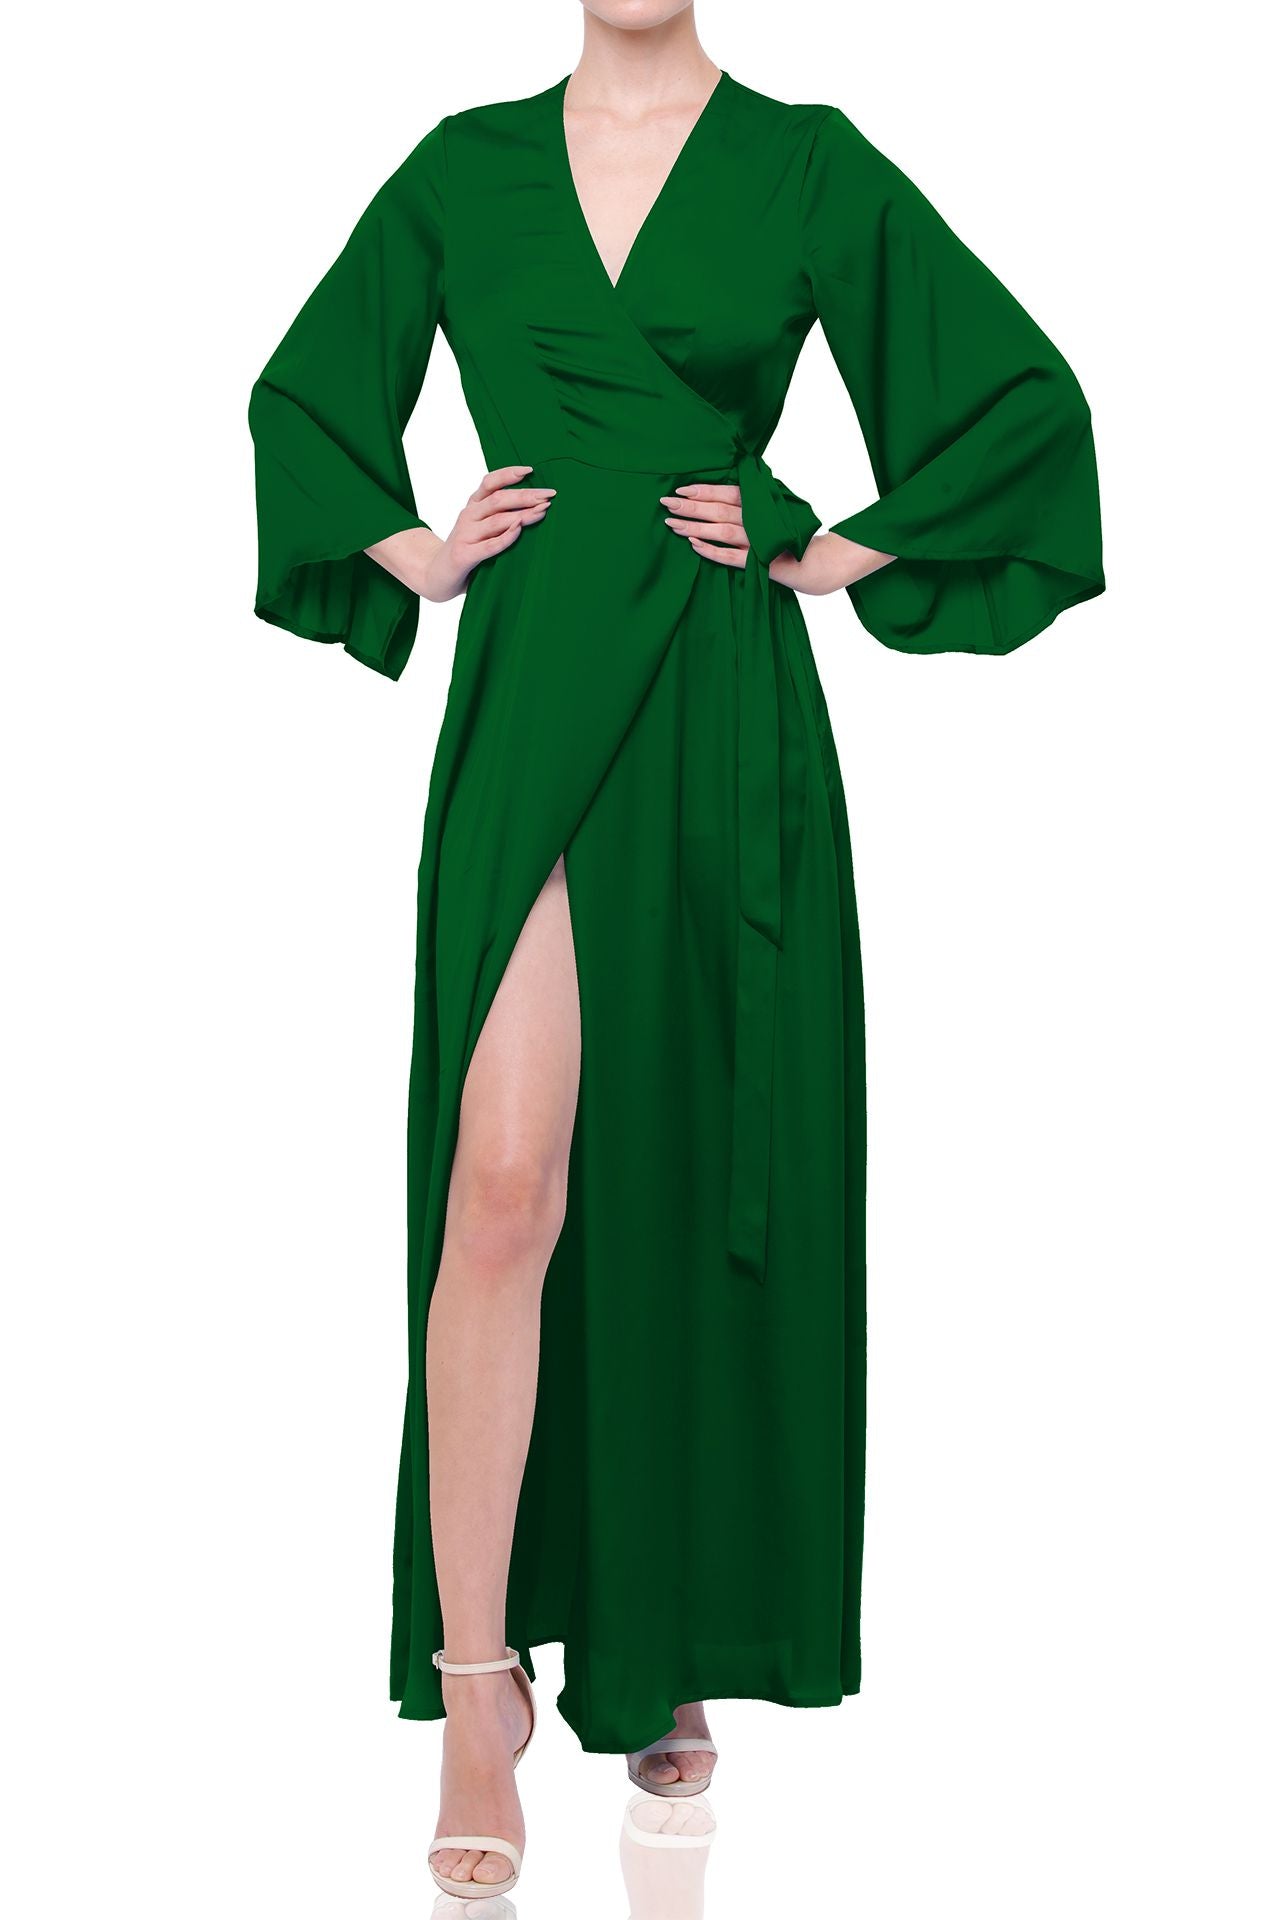 "green silk wrap dress" "wrap dress maxi long sleeve" "Kyle X Shahida" "wrap maxi dress green"